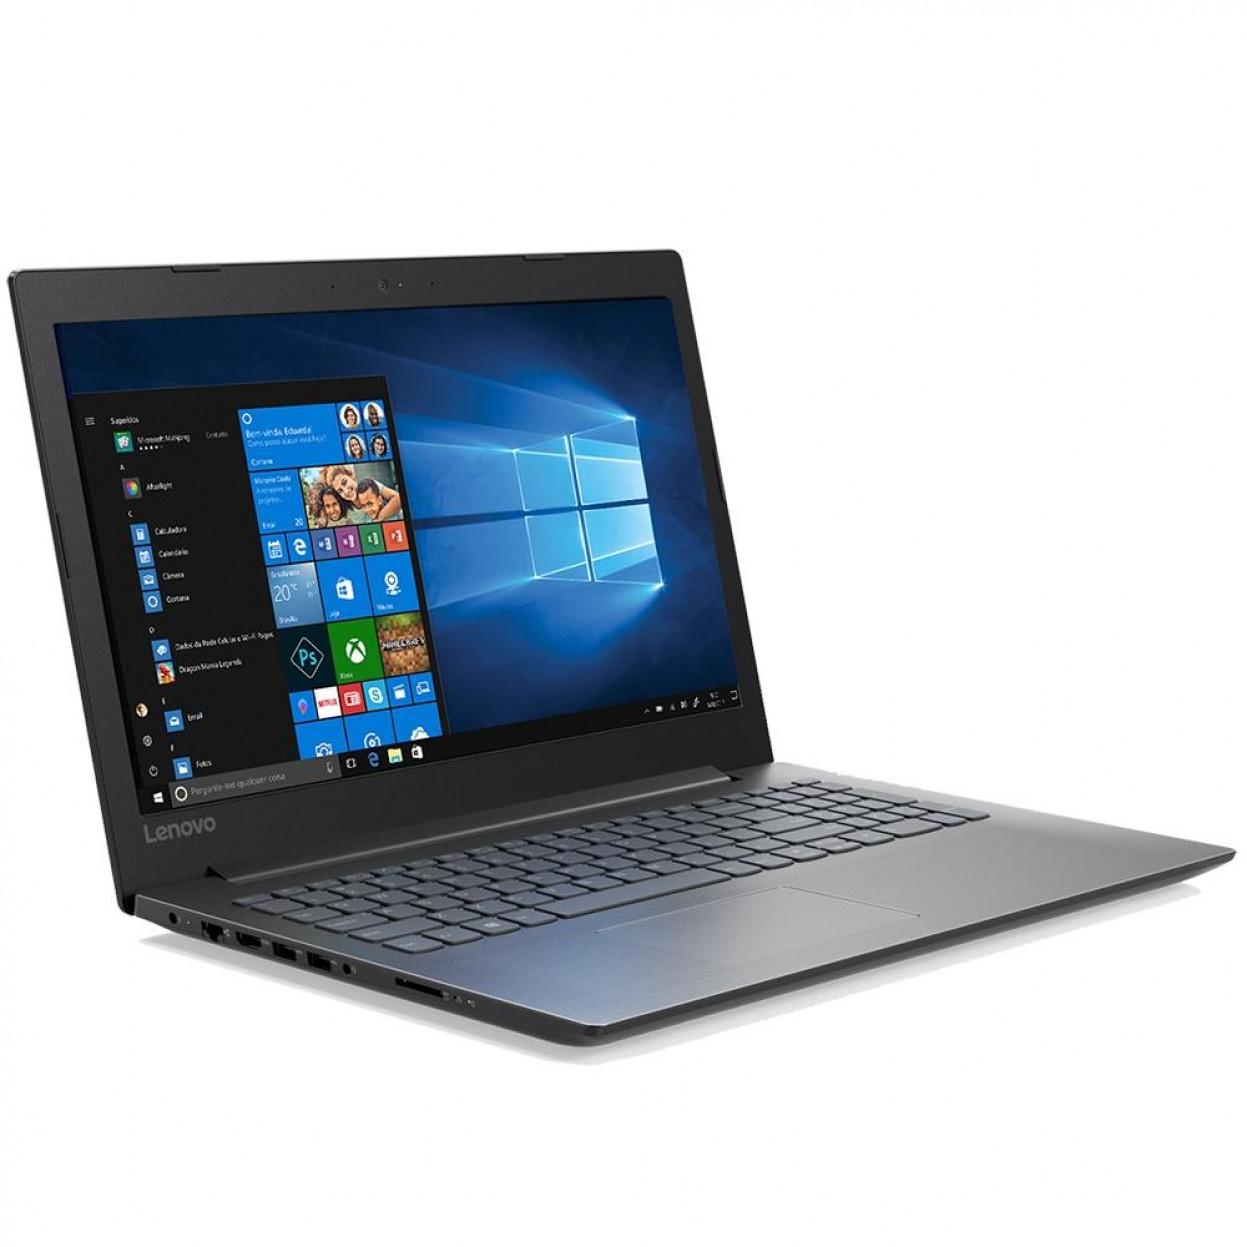 Notebook Lenovo B330 Core I5 8250u Memoria 4gb Ddr4 Hd 1tb Tela 15.6' Fhd Windows 10 Home 